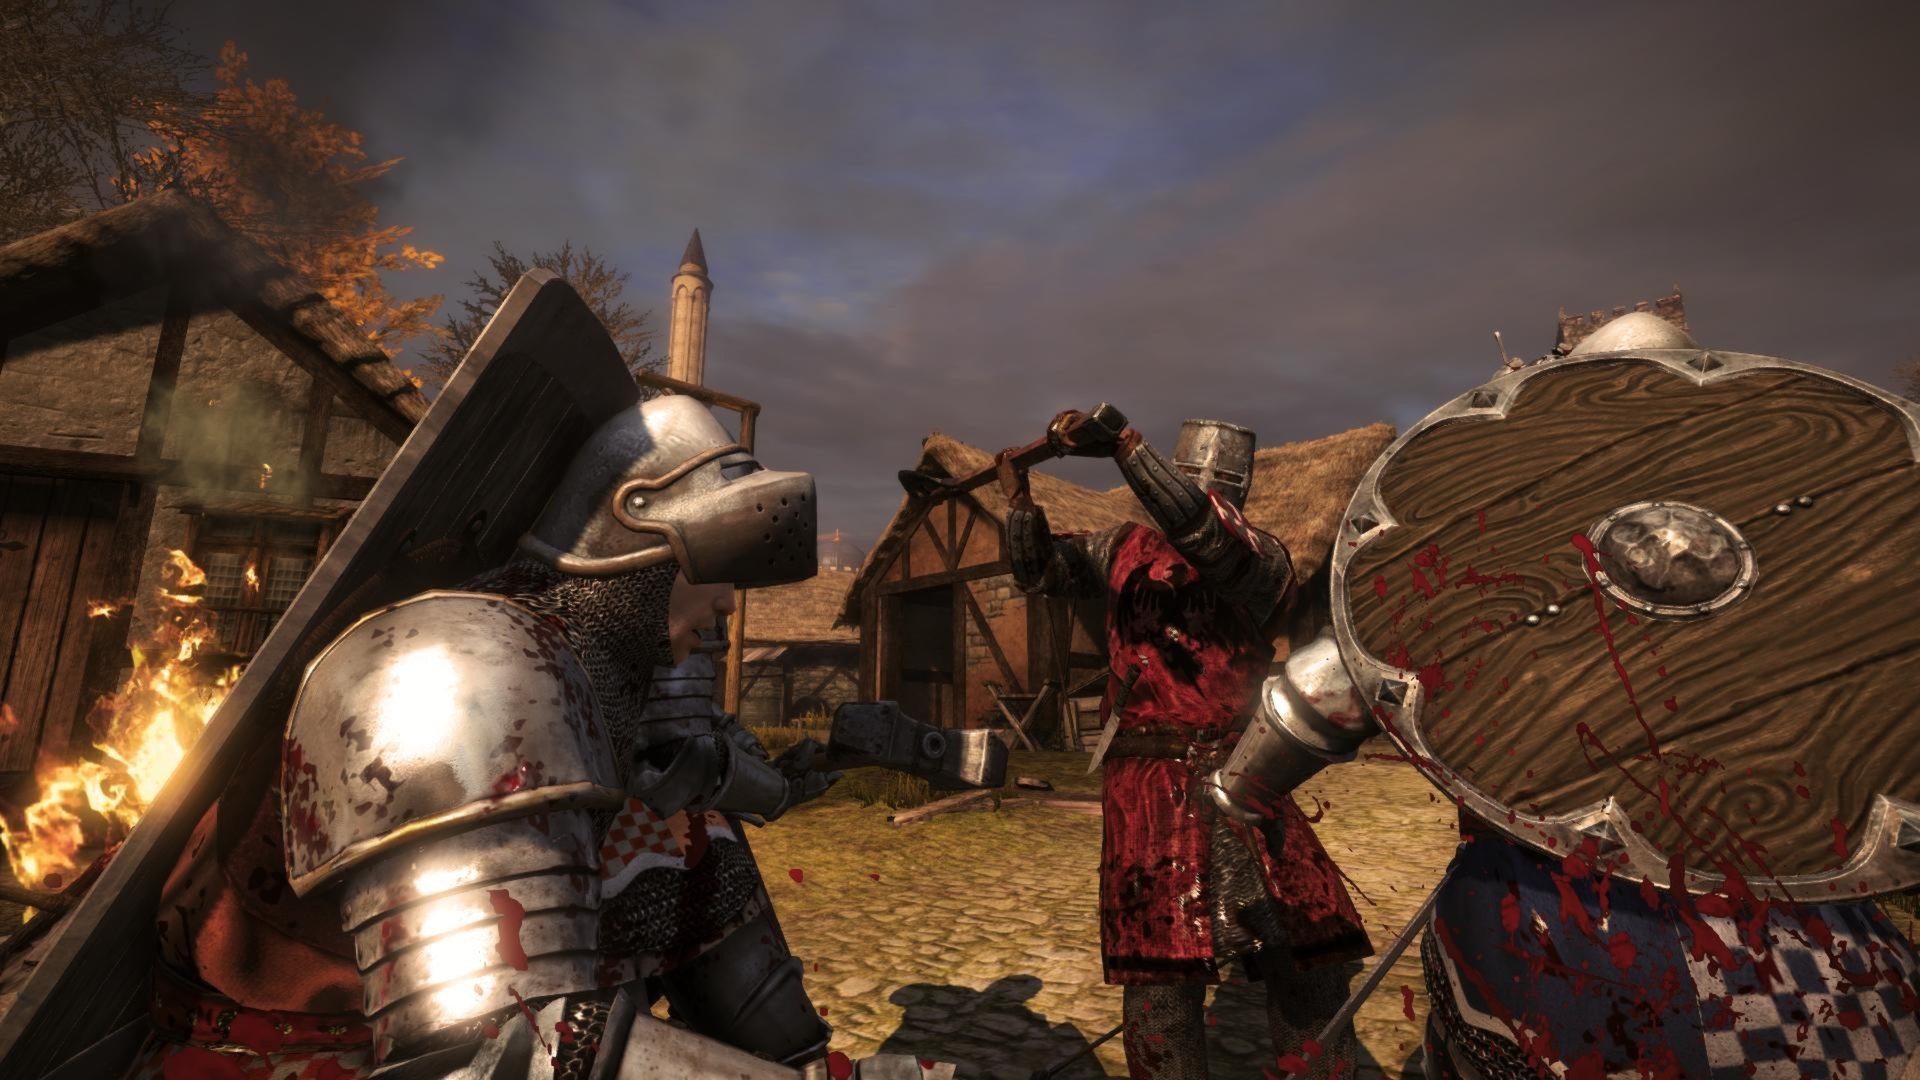 chivalry medieval warfare server